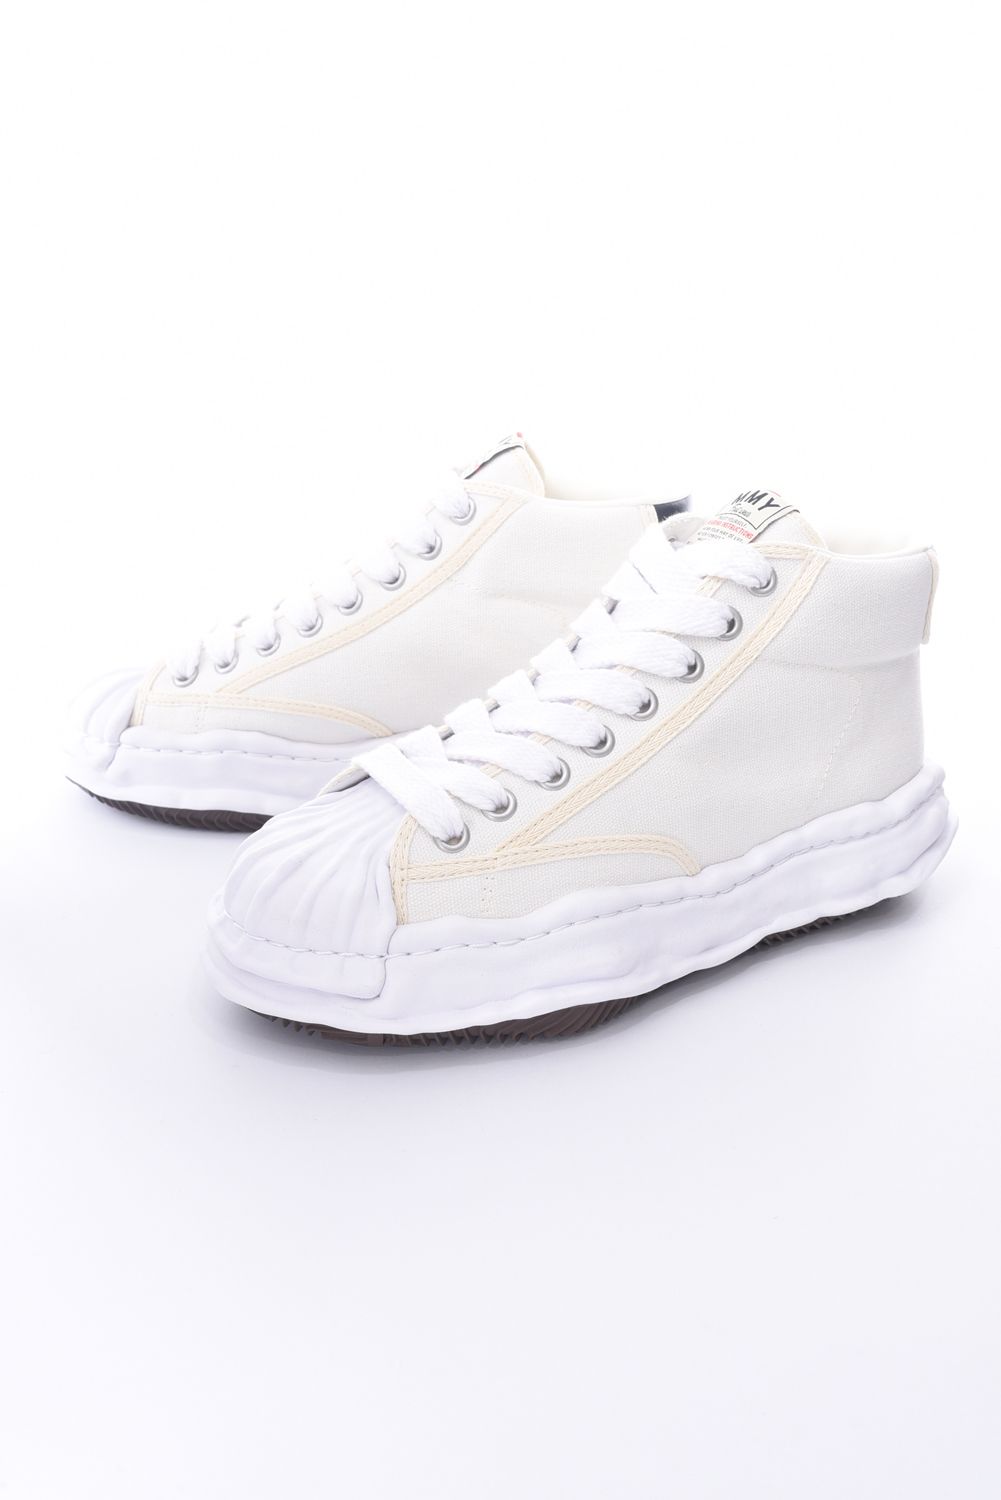 Maison MIHARA YASUHIRO - BLAKEY OG Sole Canvas High-top Sneaker / オリジナルソール  キャンバス ハイカットスニーカー ホワイト | gossip